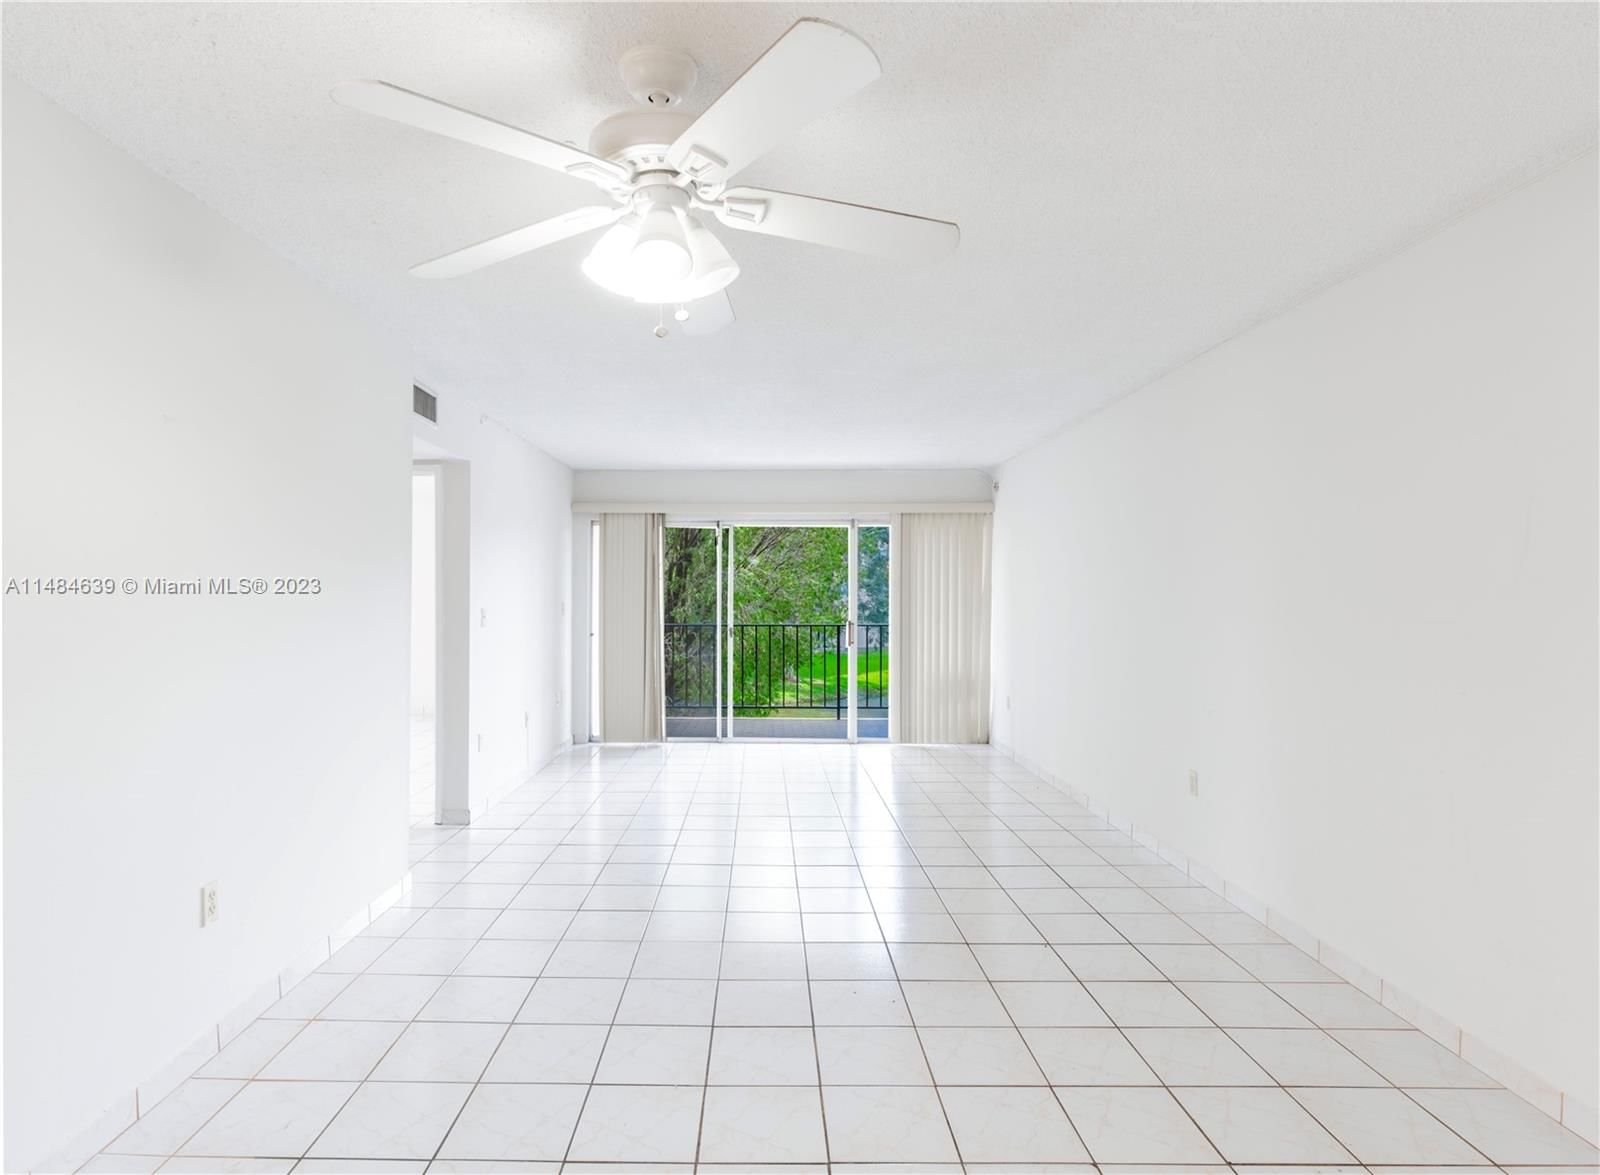 Real estate property located at 706 87th Ave #205, Miami-Dade County, FERNWOODS CONDO NO 3, Miami, FL